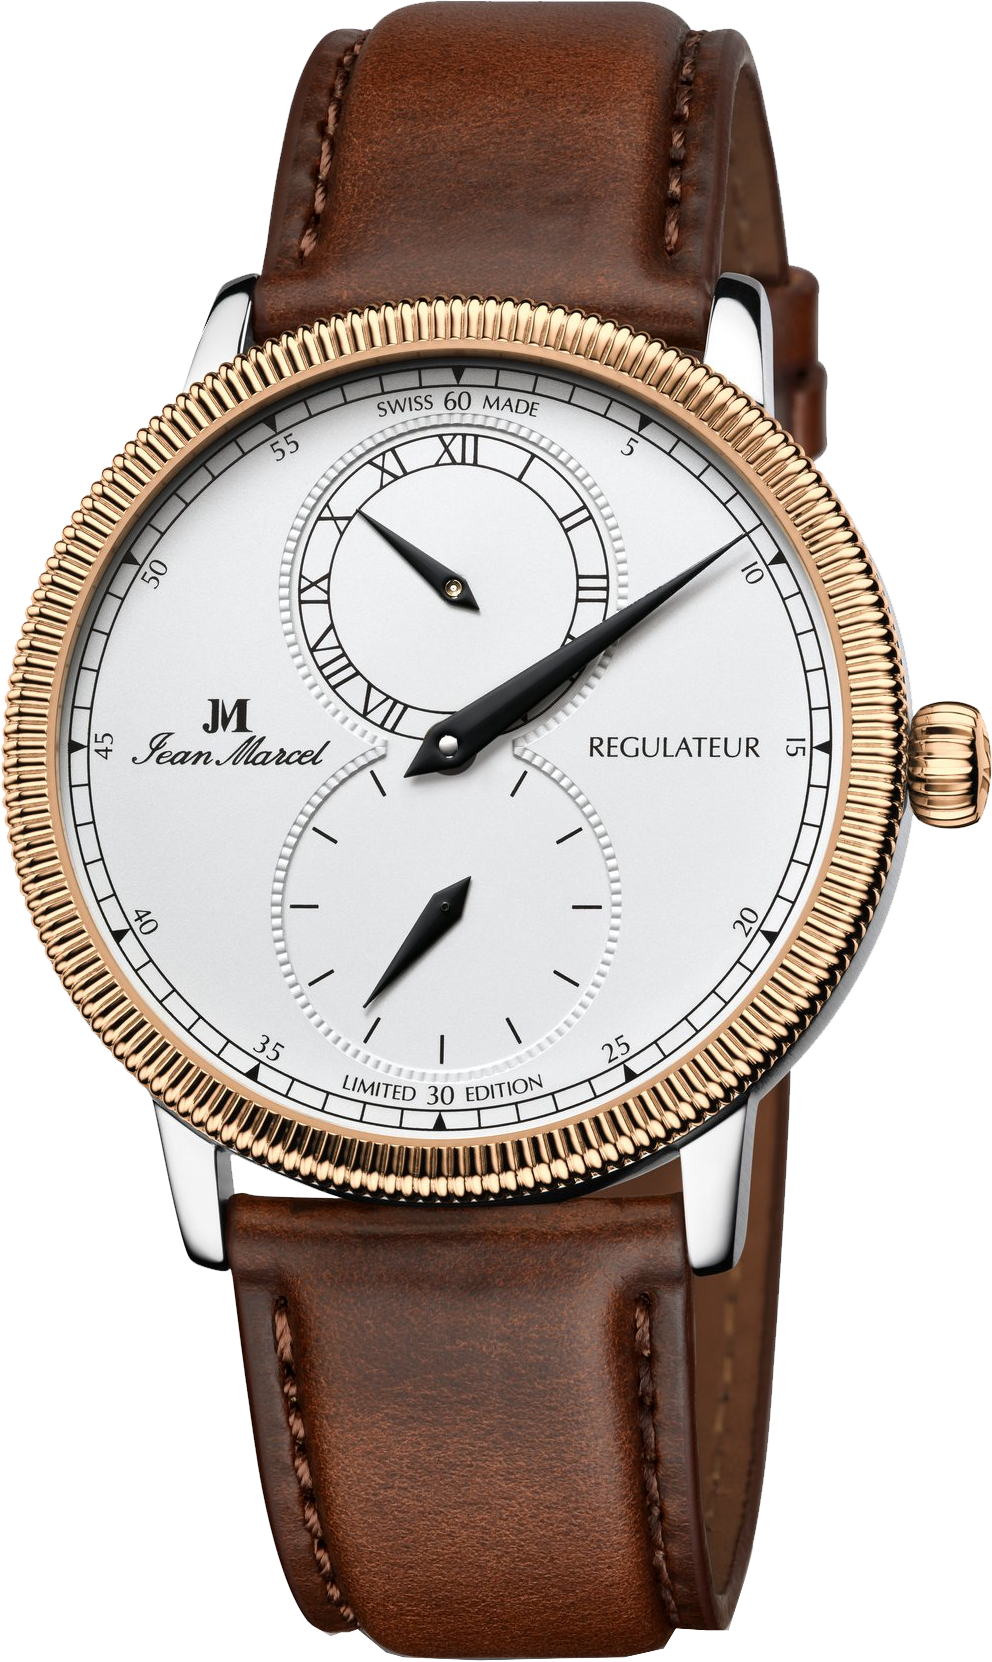 Uhrenvorstellung der Jean Marcel Regulateur 361.61.52.26